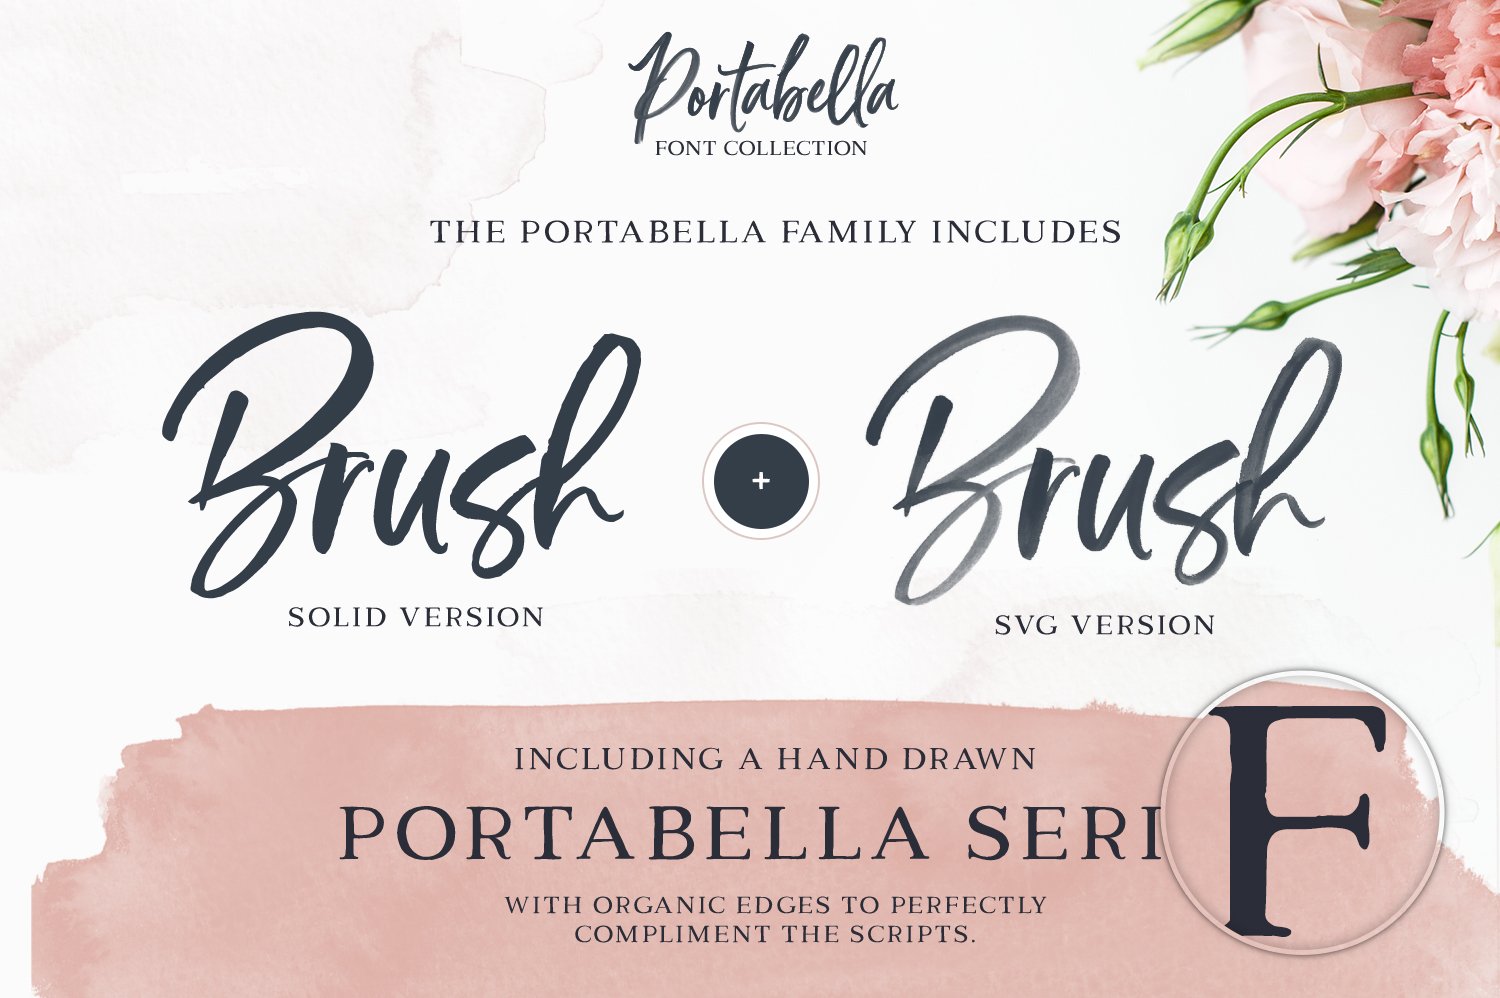 Portabella Font Collection strip2